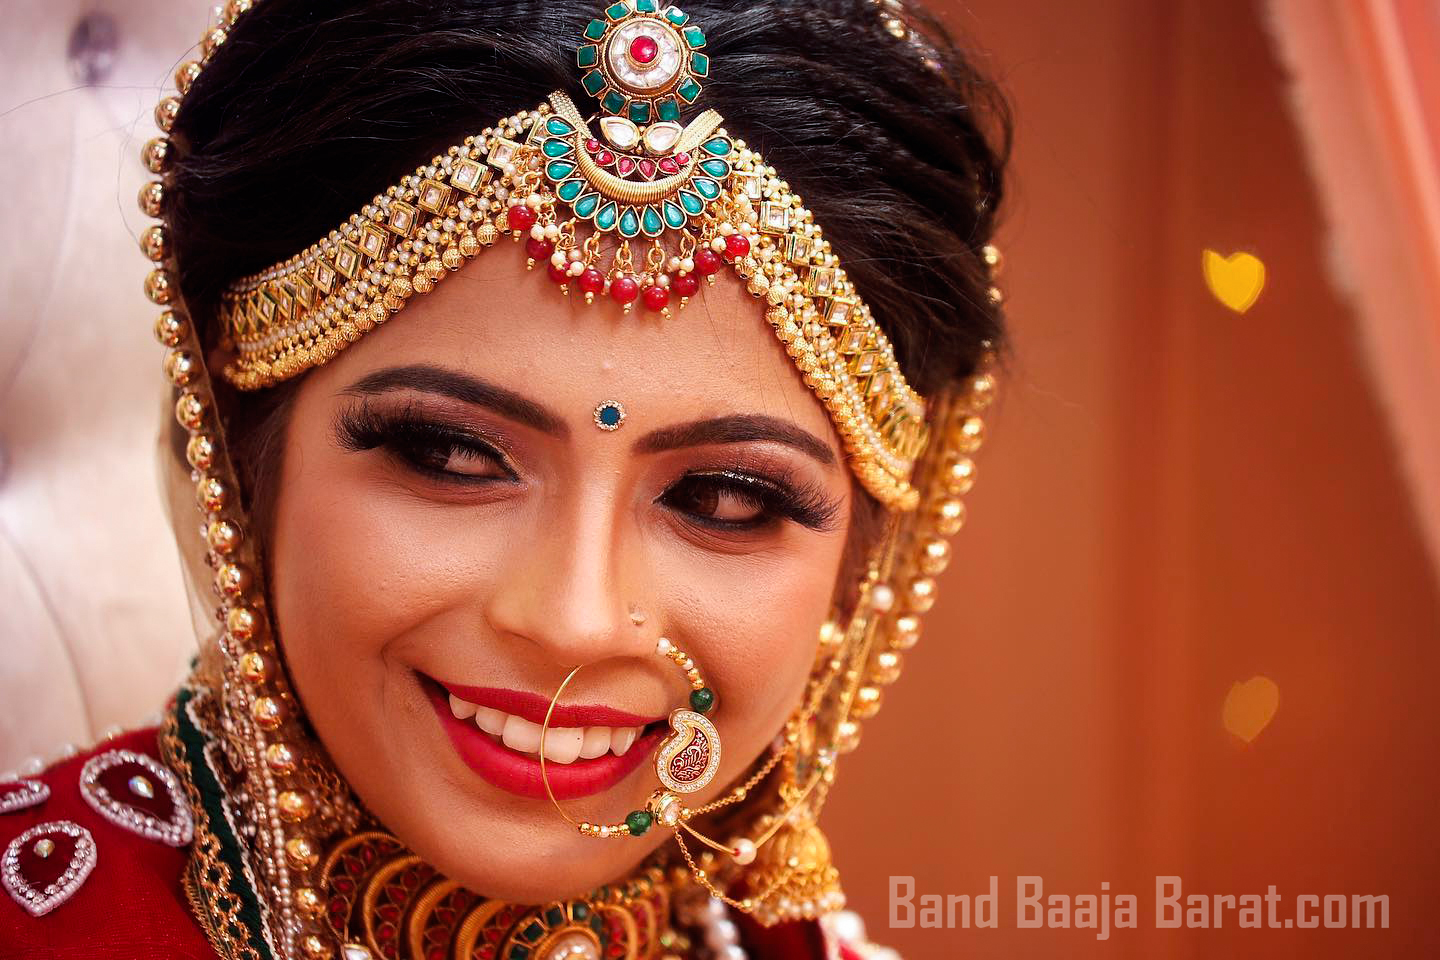 Chetna Thakkar's Bridal Studio image